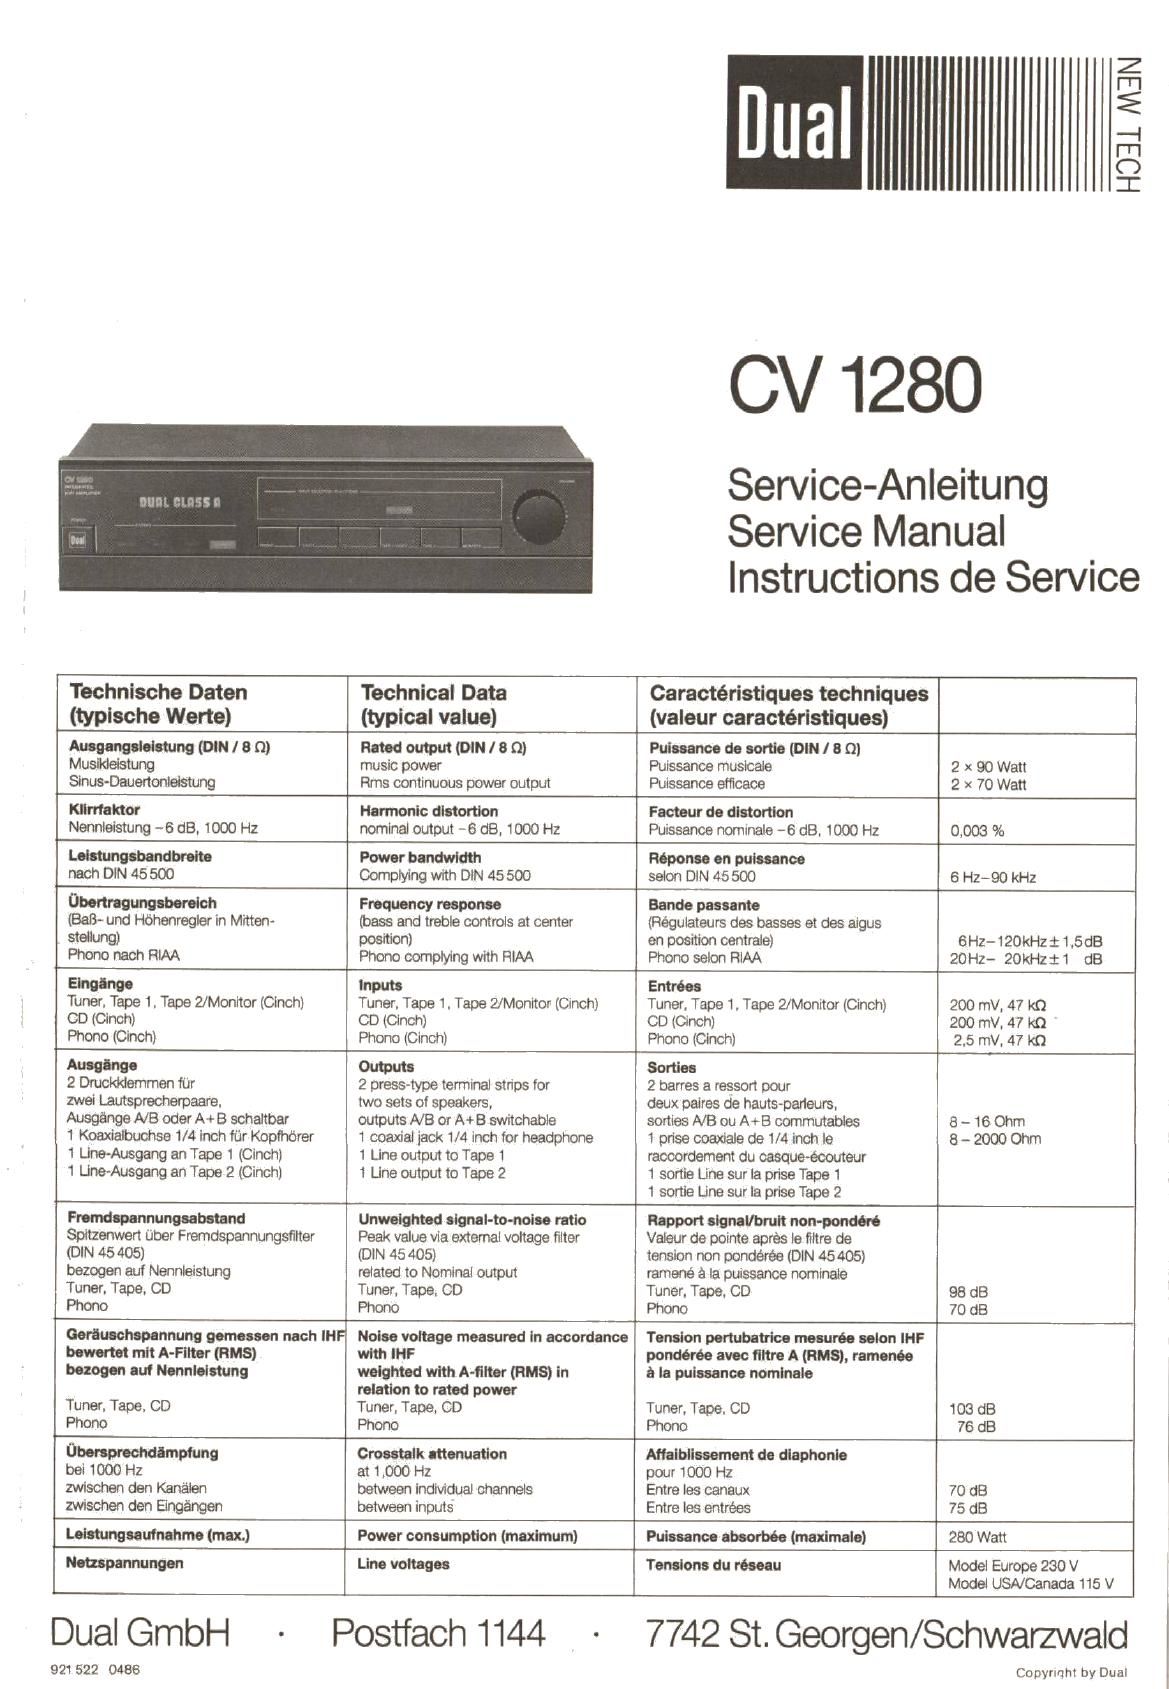 Dual CV 1280 Service Manual